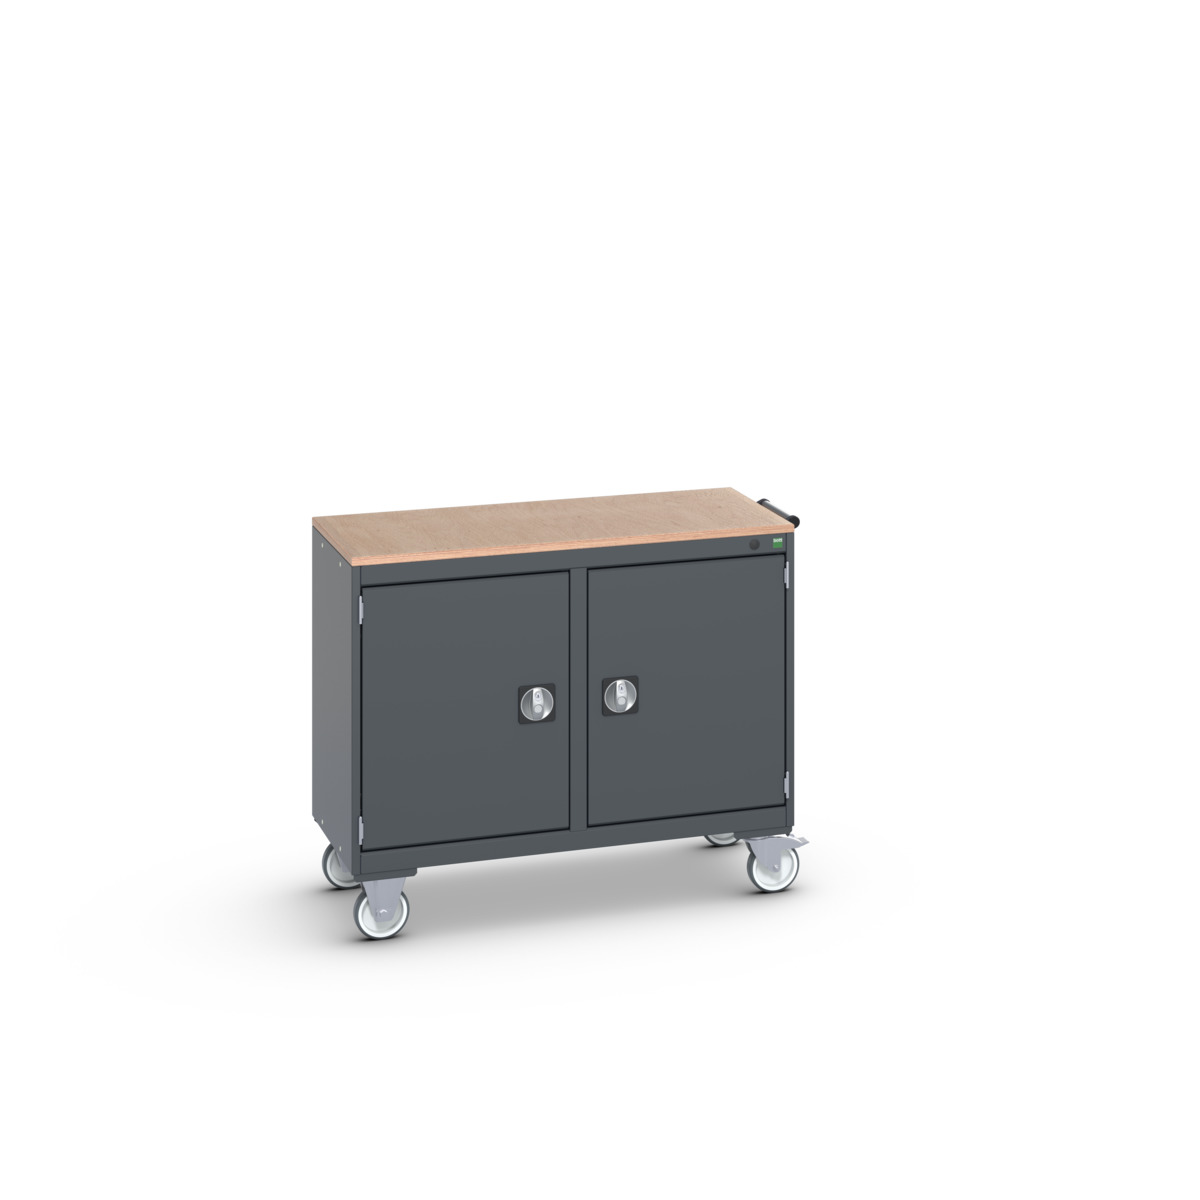 41006001.77V - cubio mobile cabinet 50/50 (mpx)